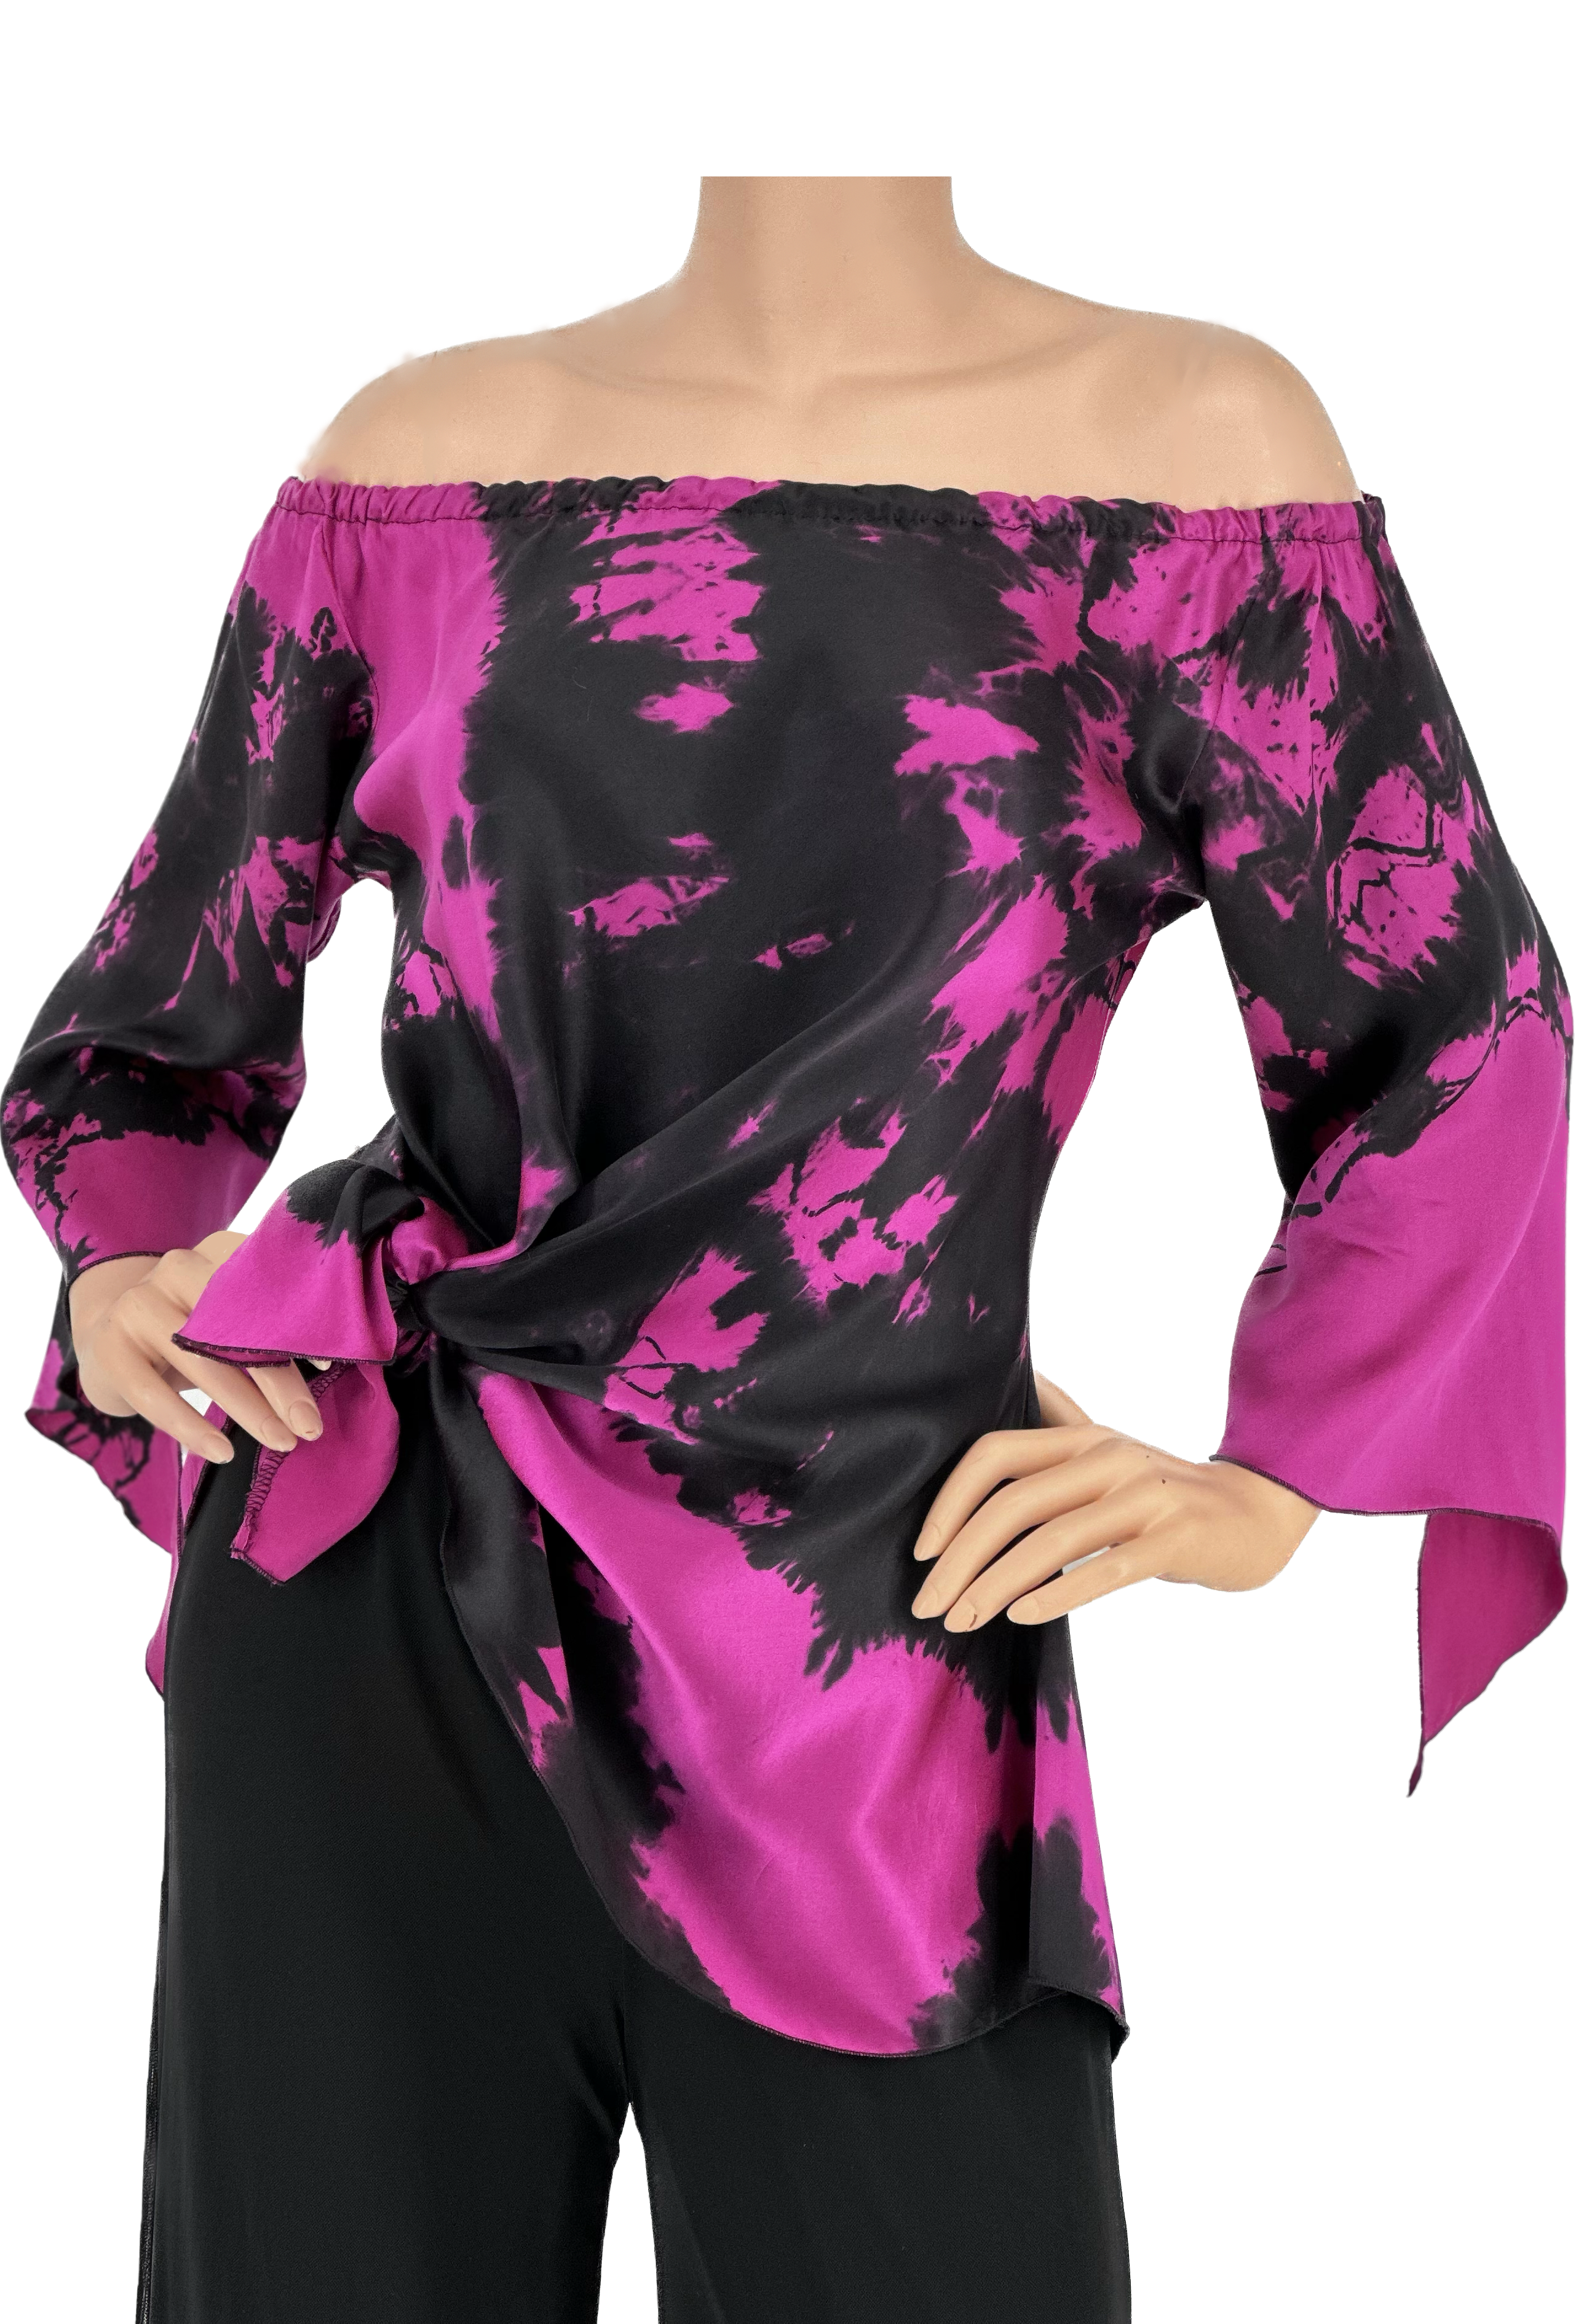 Off The Shoulder Pink and Black Tie Top B1701OM - Sara Mique Evening Wear